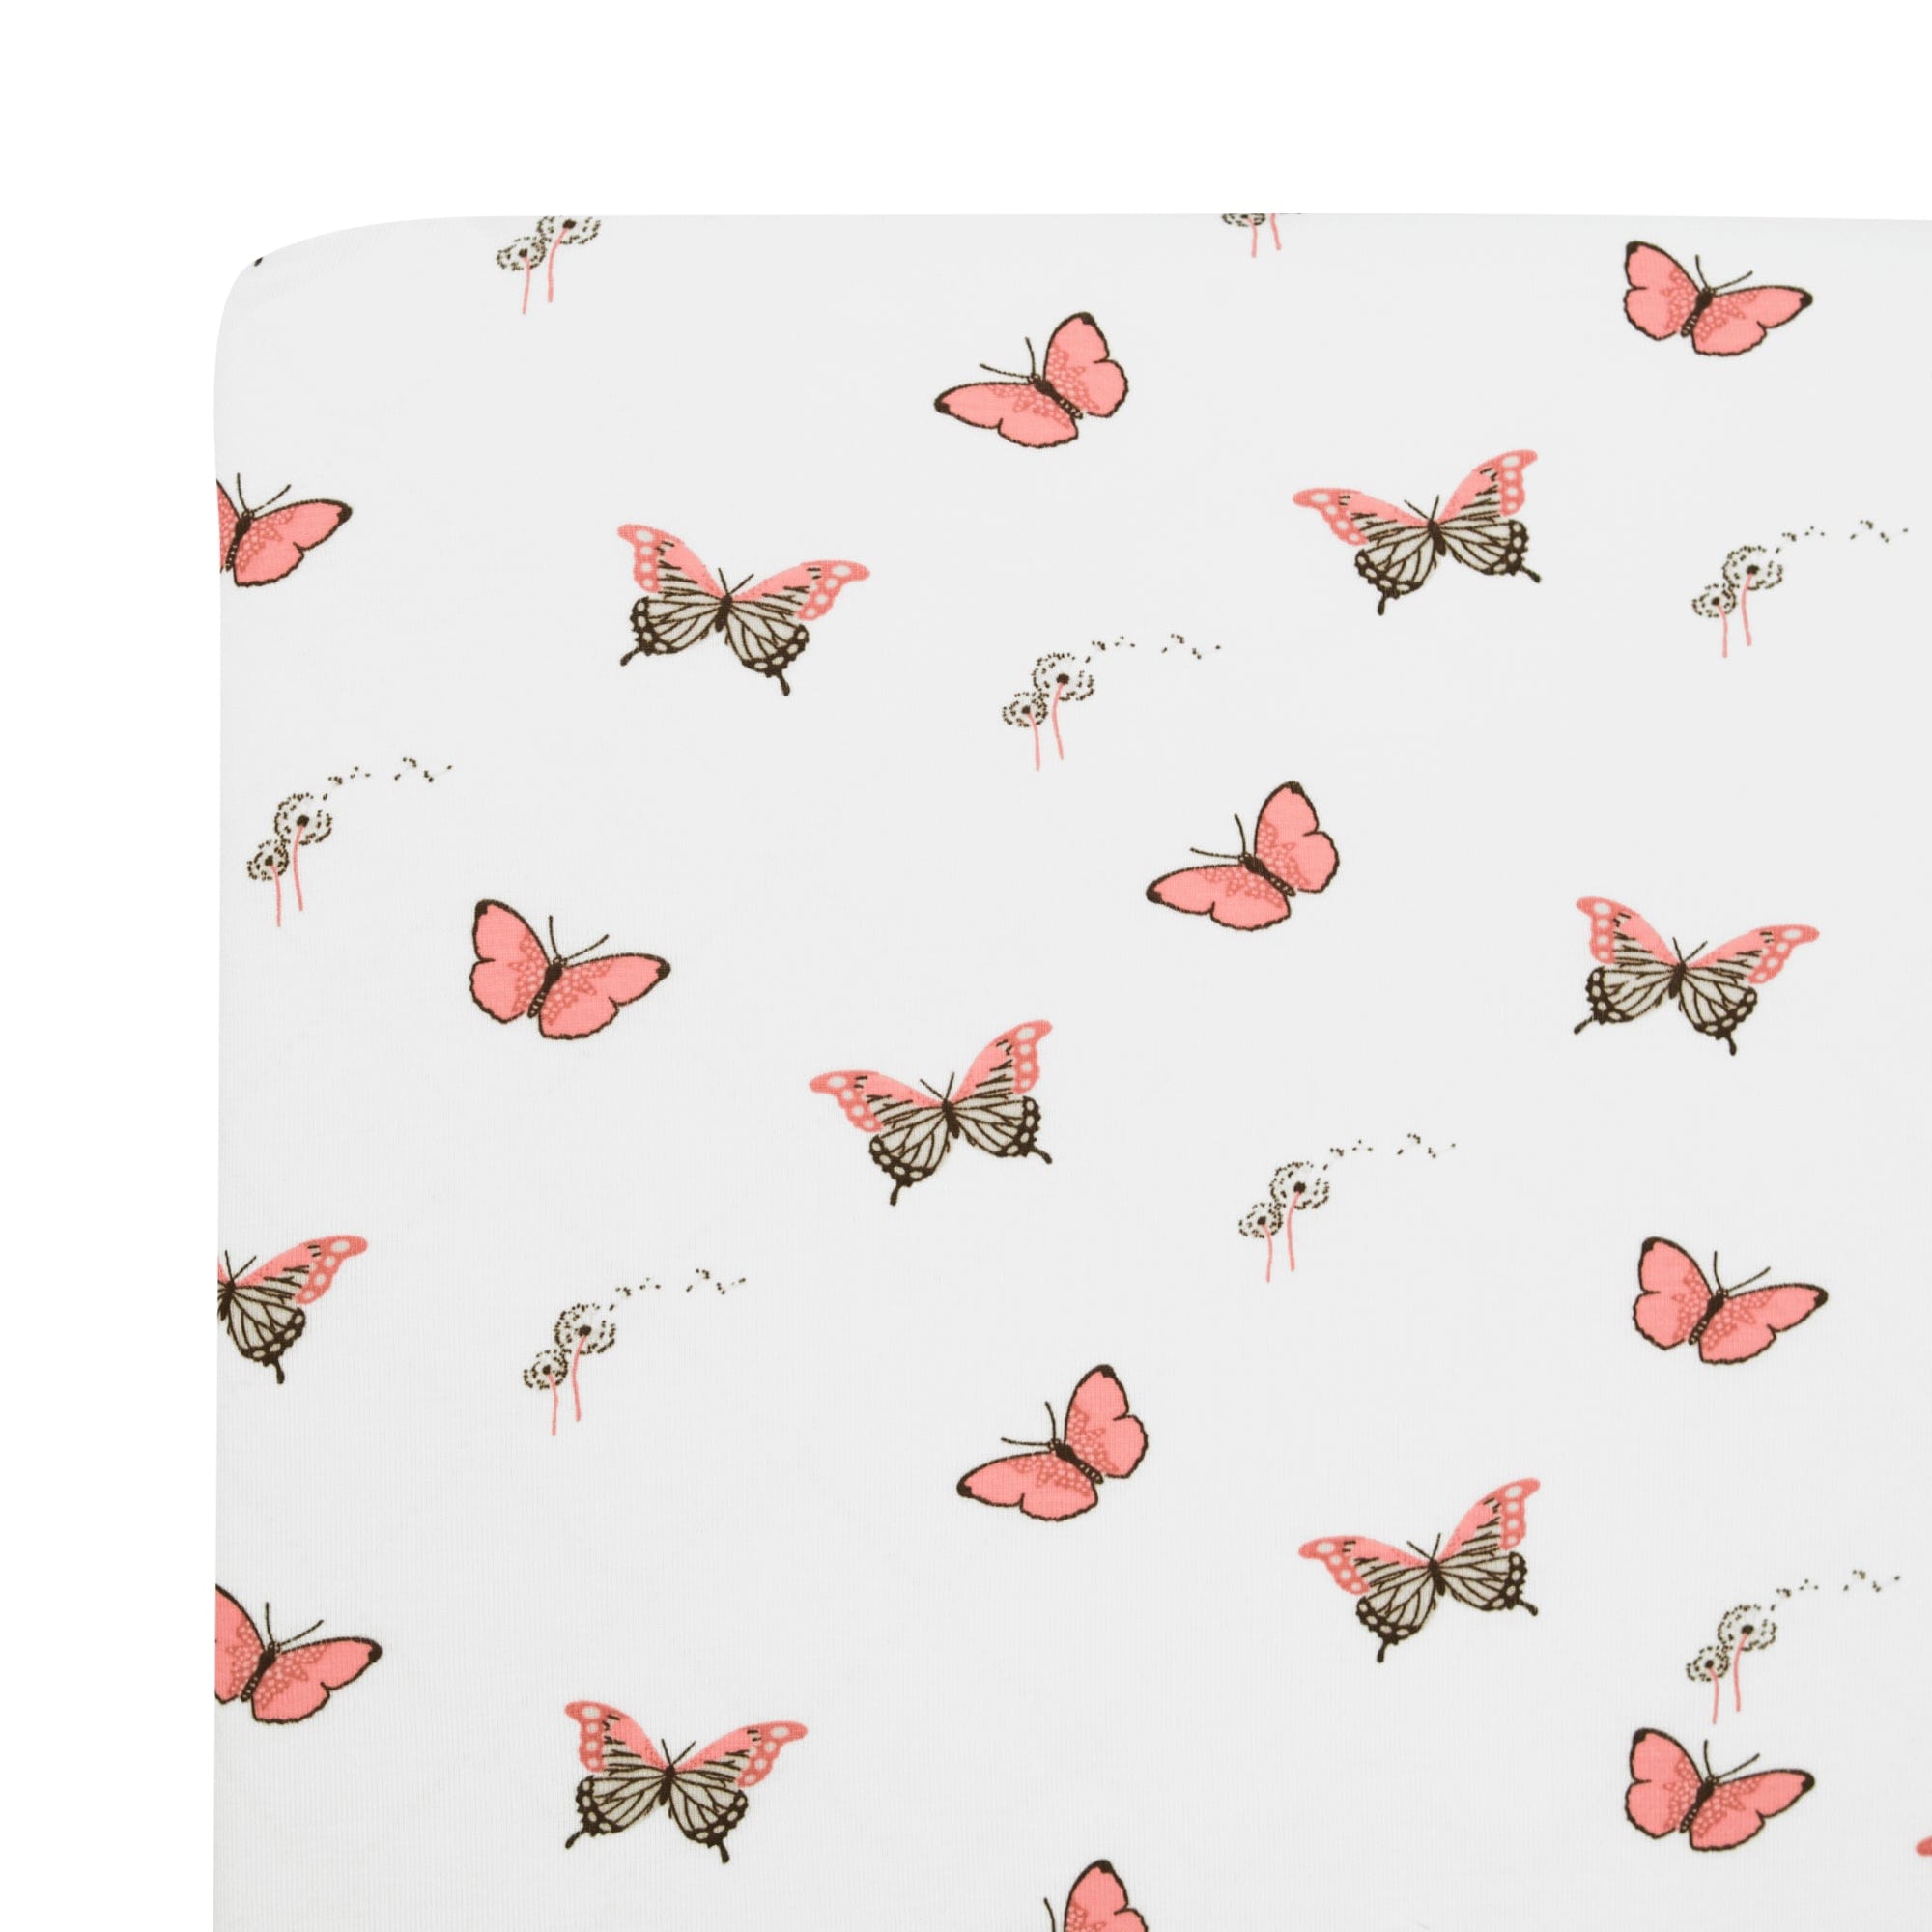 Kyte BABY Crib Sheet Crib Sheet / Butterfly Crib Sheet in Butterfly